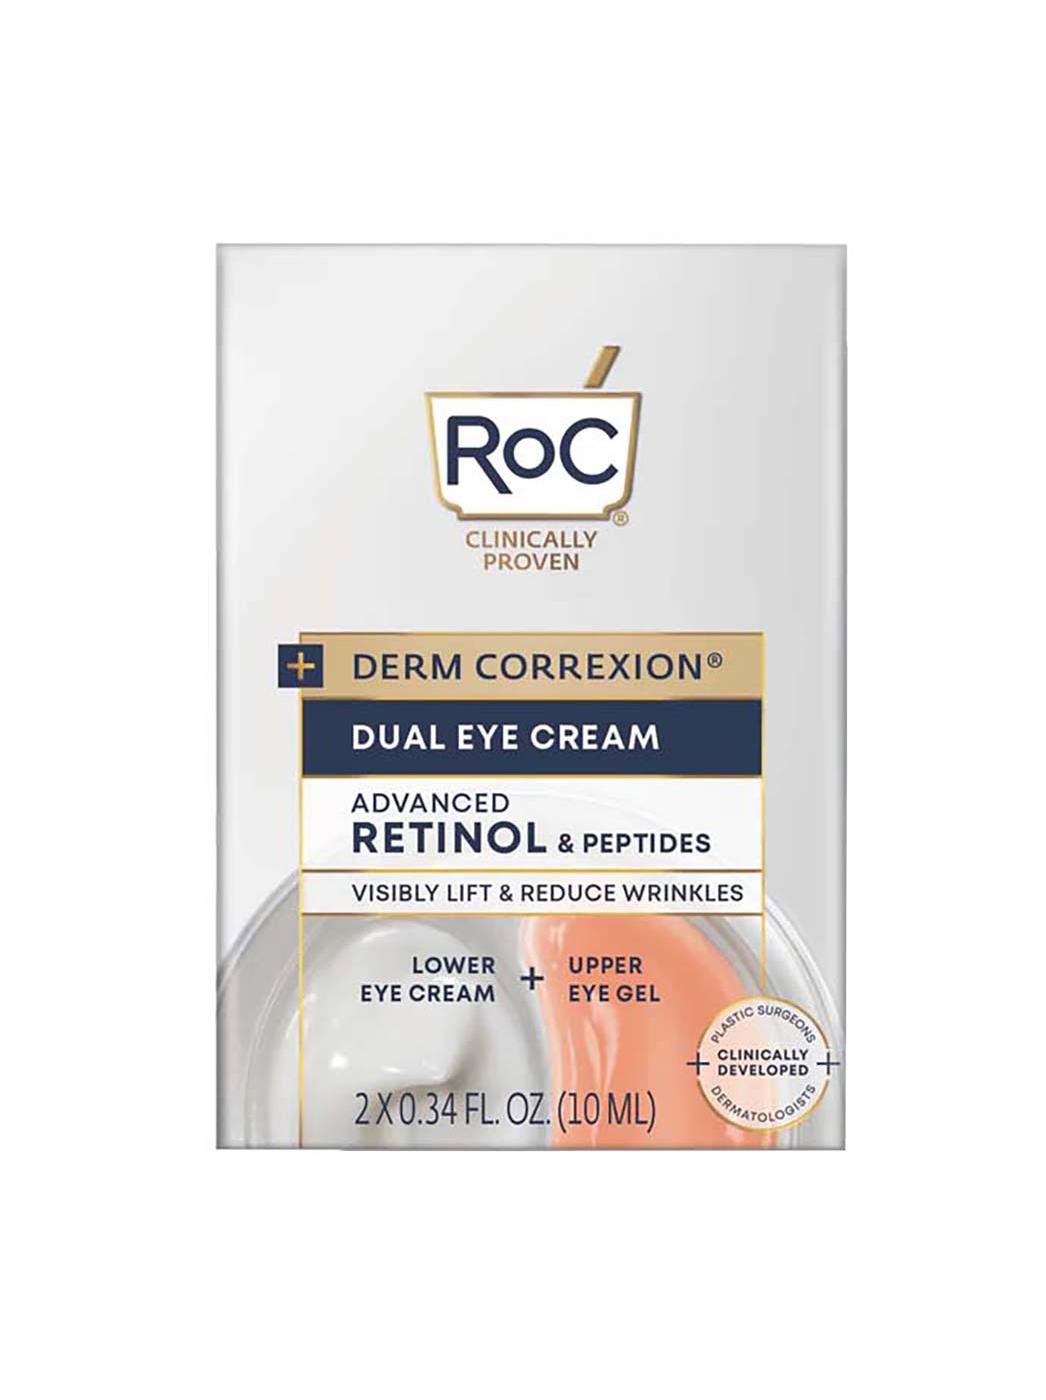 RoC Derm Correxion Dual Eye Cream; image 1 of 4